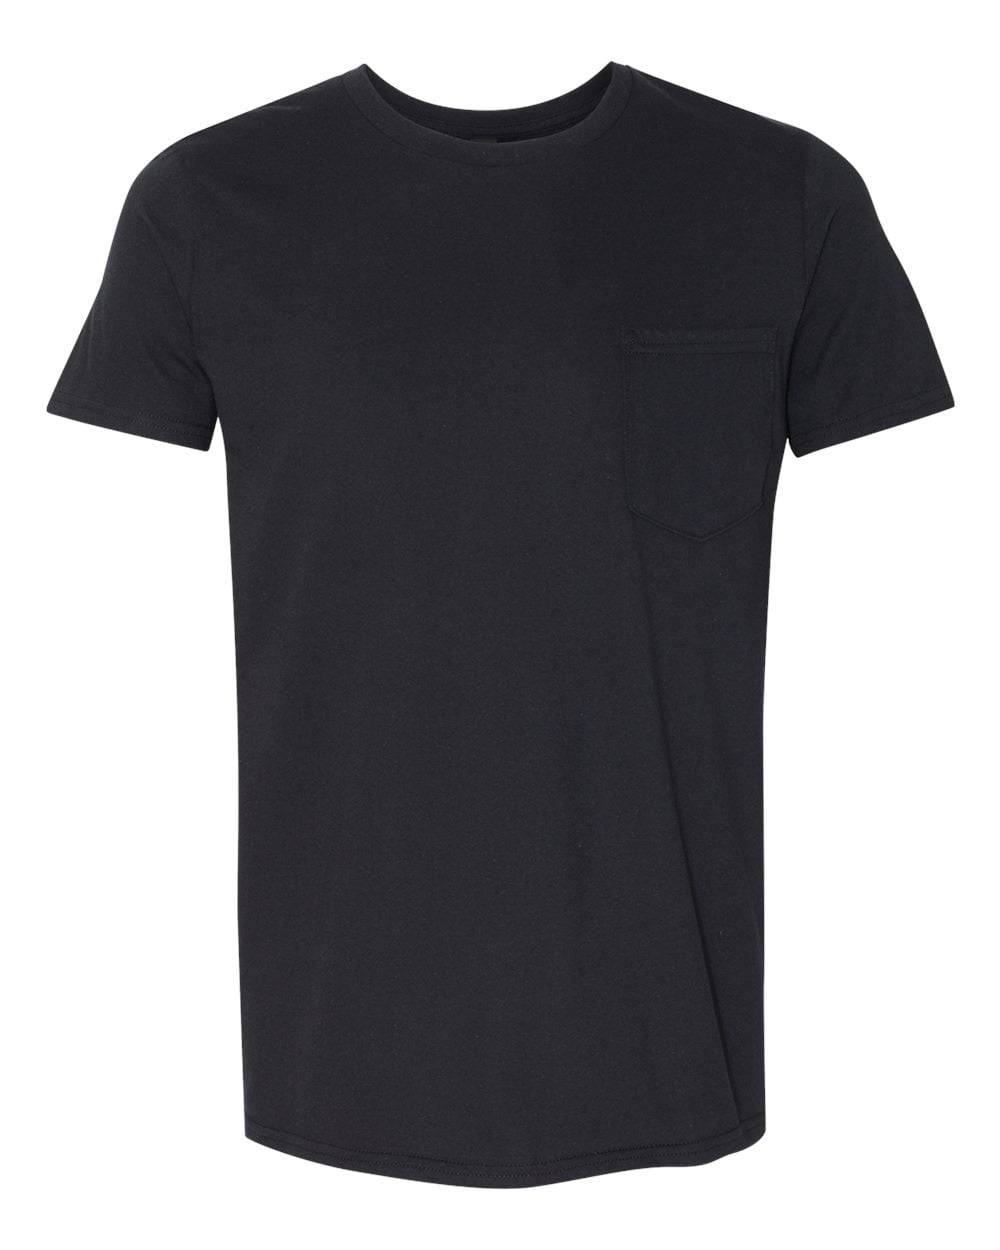 Anvil - New MmF - Lightweight Pocket T-Shirt - Walmart.com